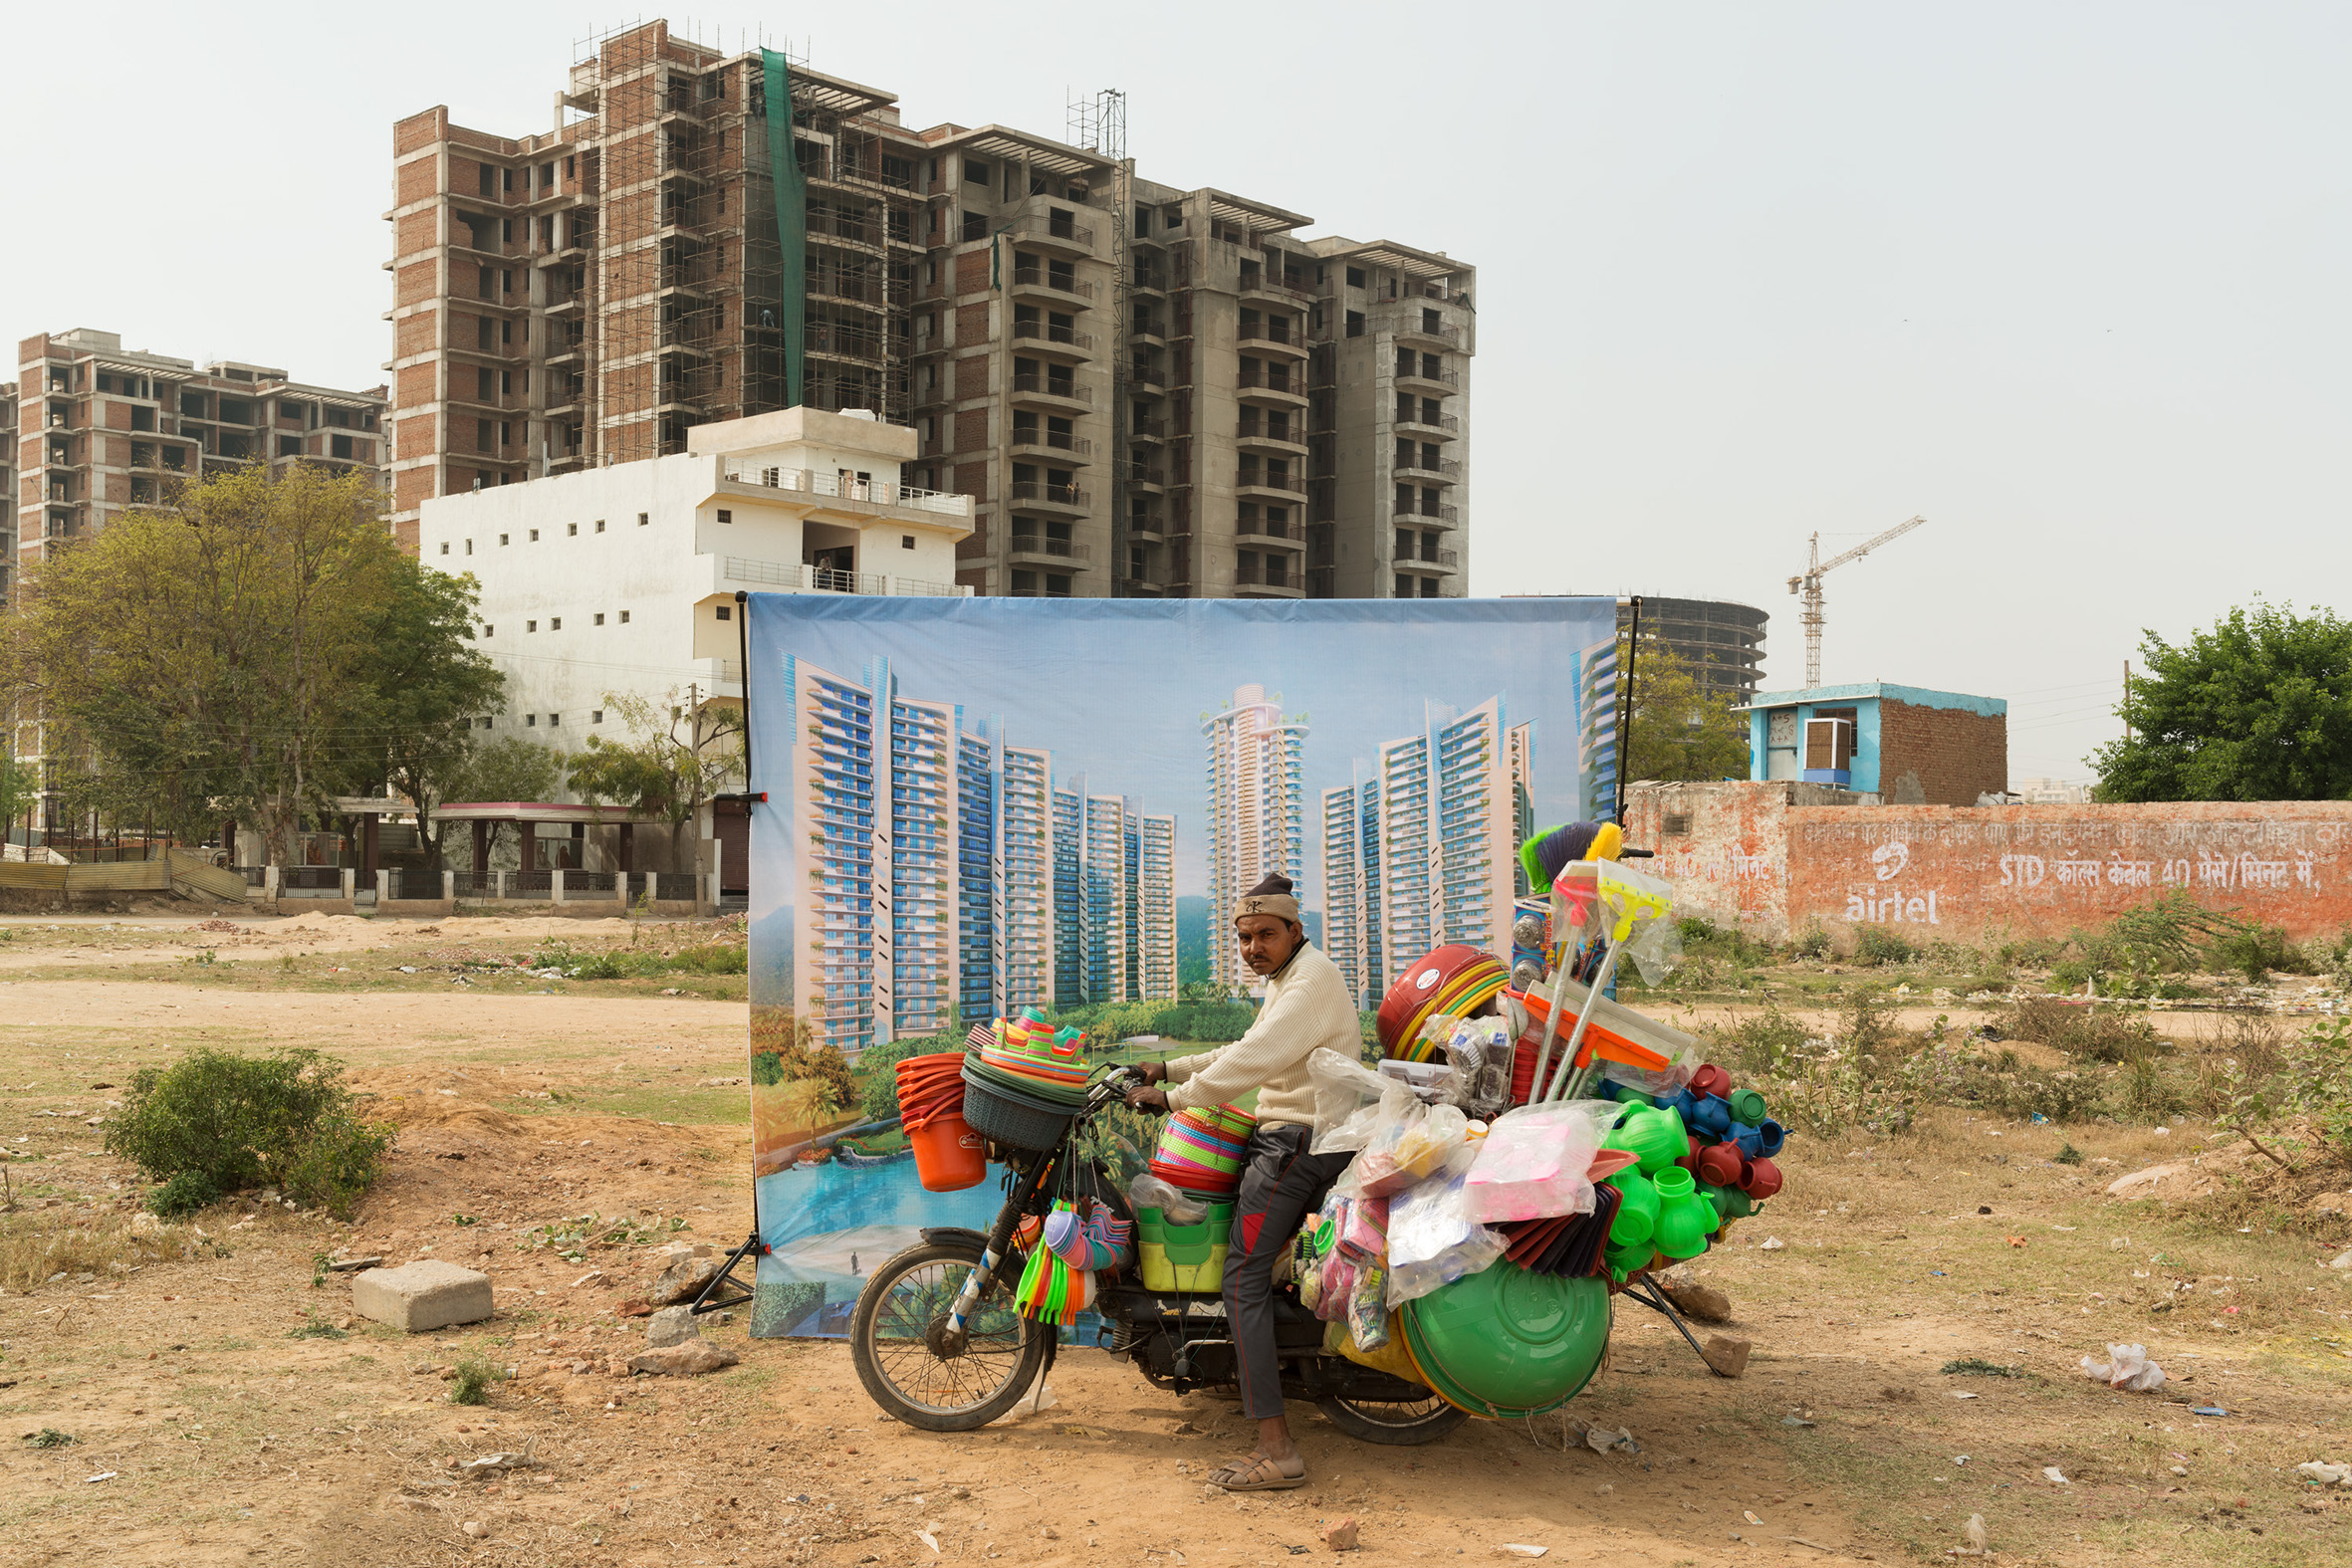 Archifoto 2017 : Arthur Crestani, Bad City Dreams, Gurgaon, Inde, 2017 © Arthur Crestani